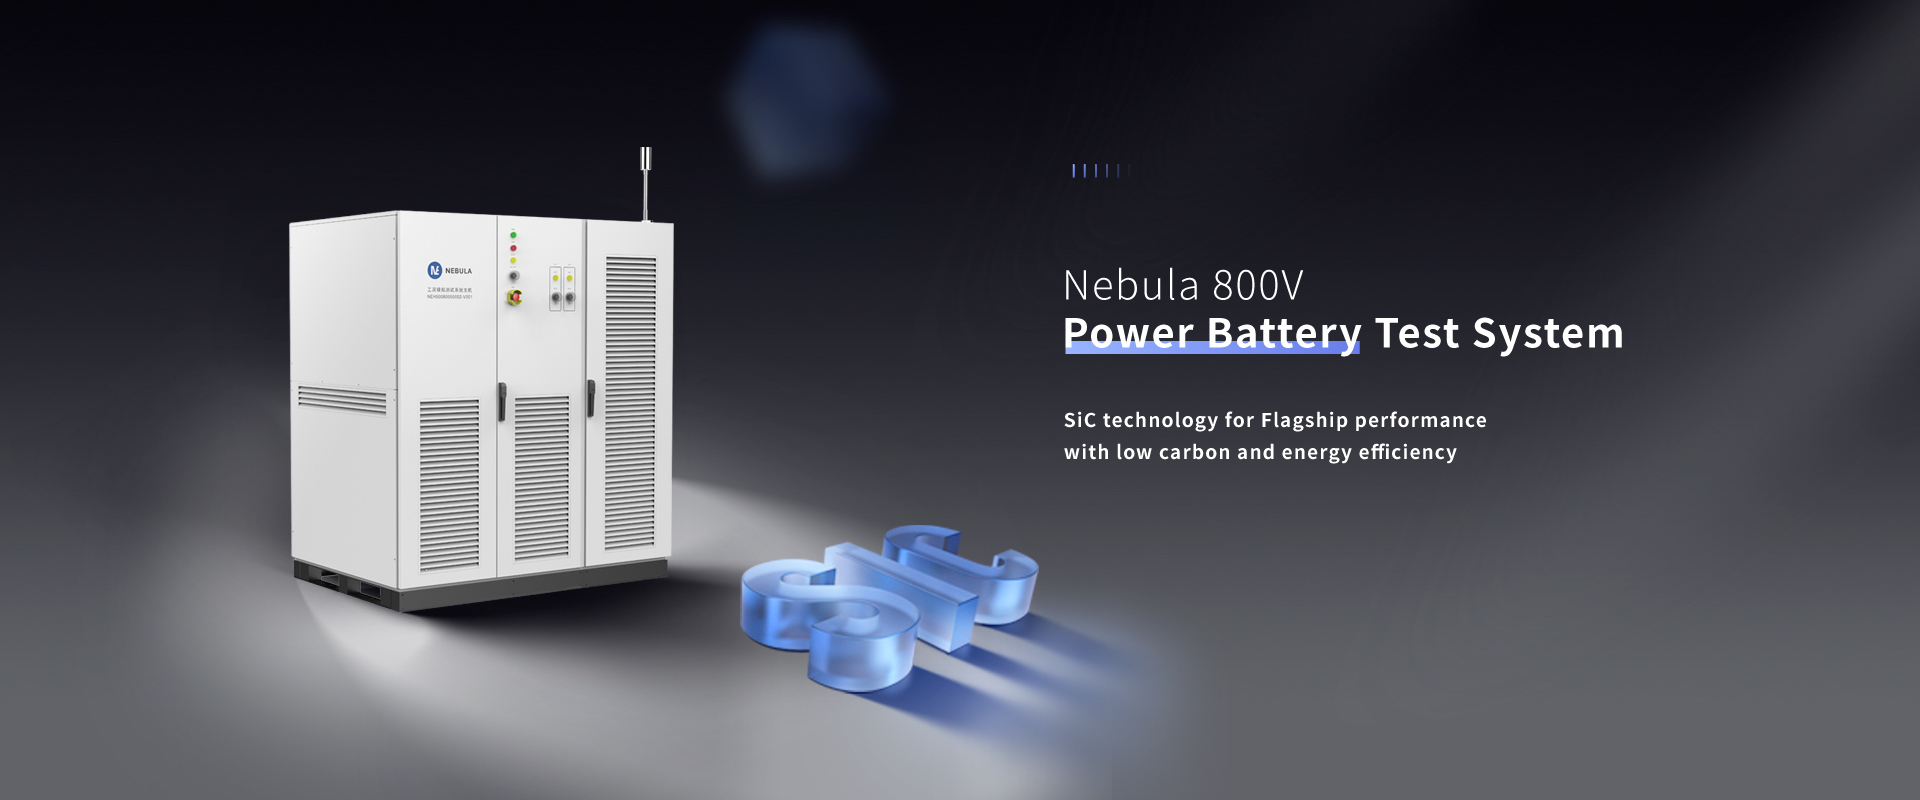 Nebula 800V Power Battery Test System